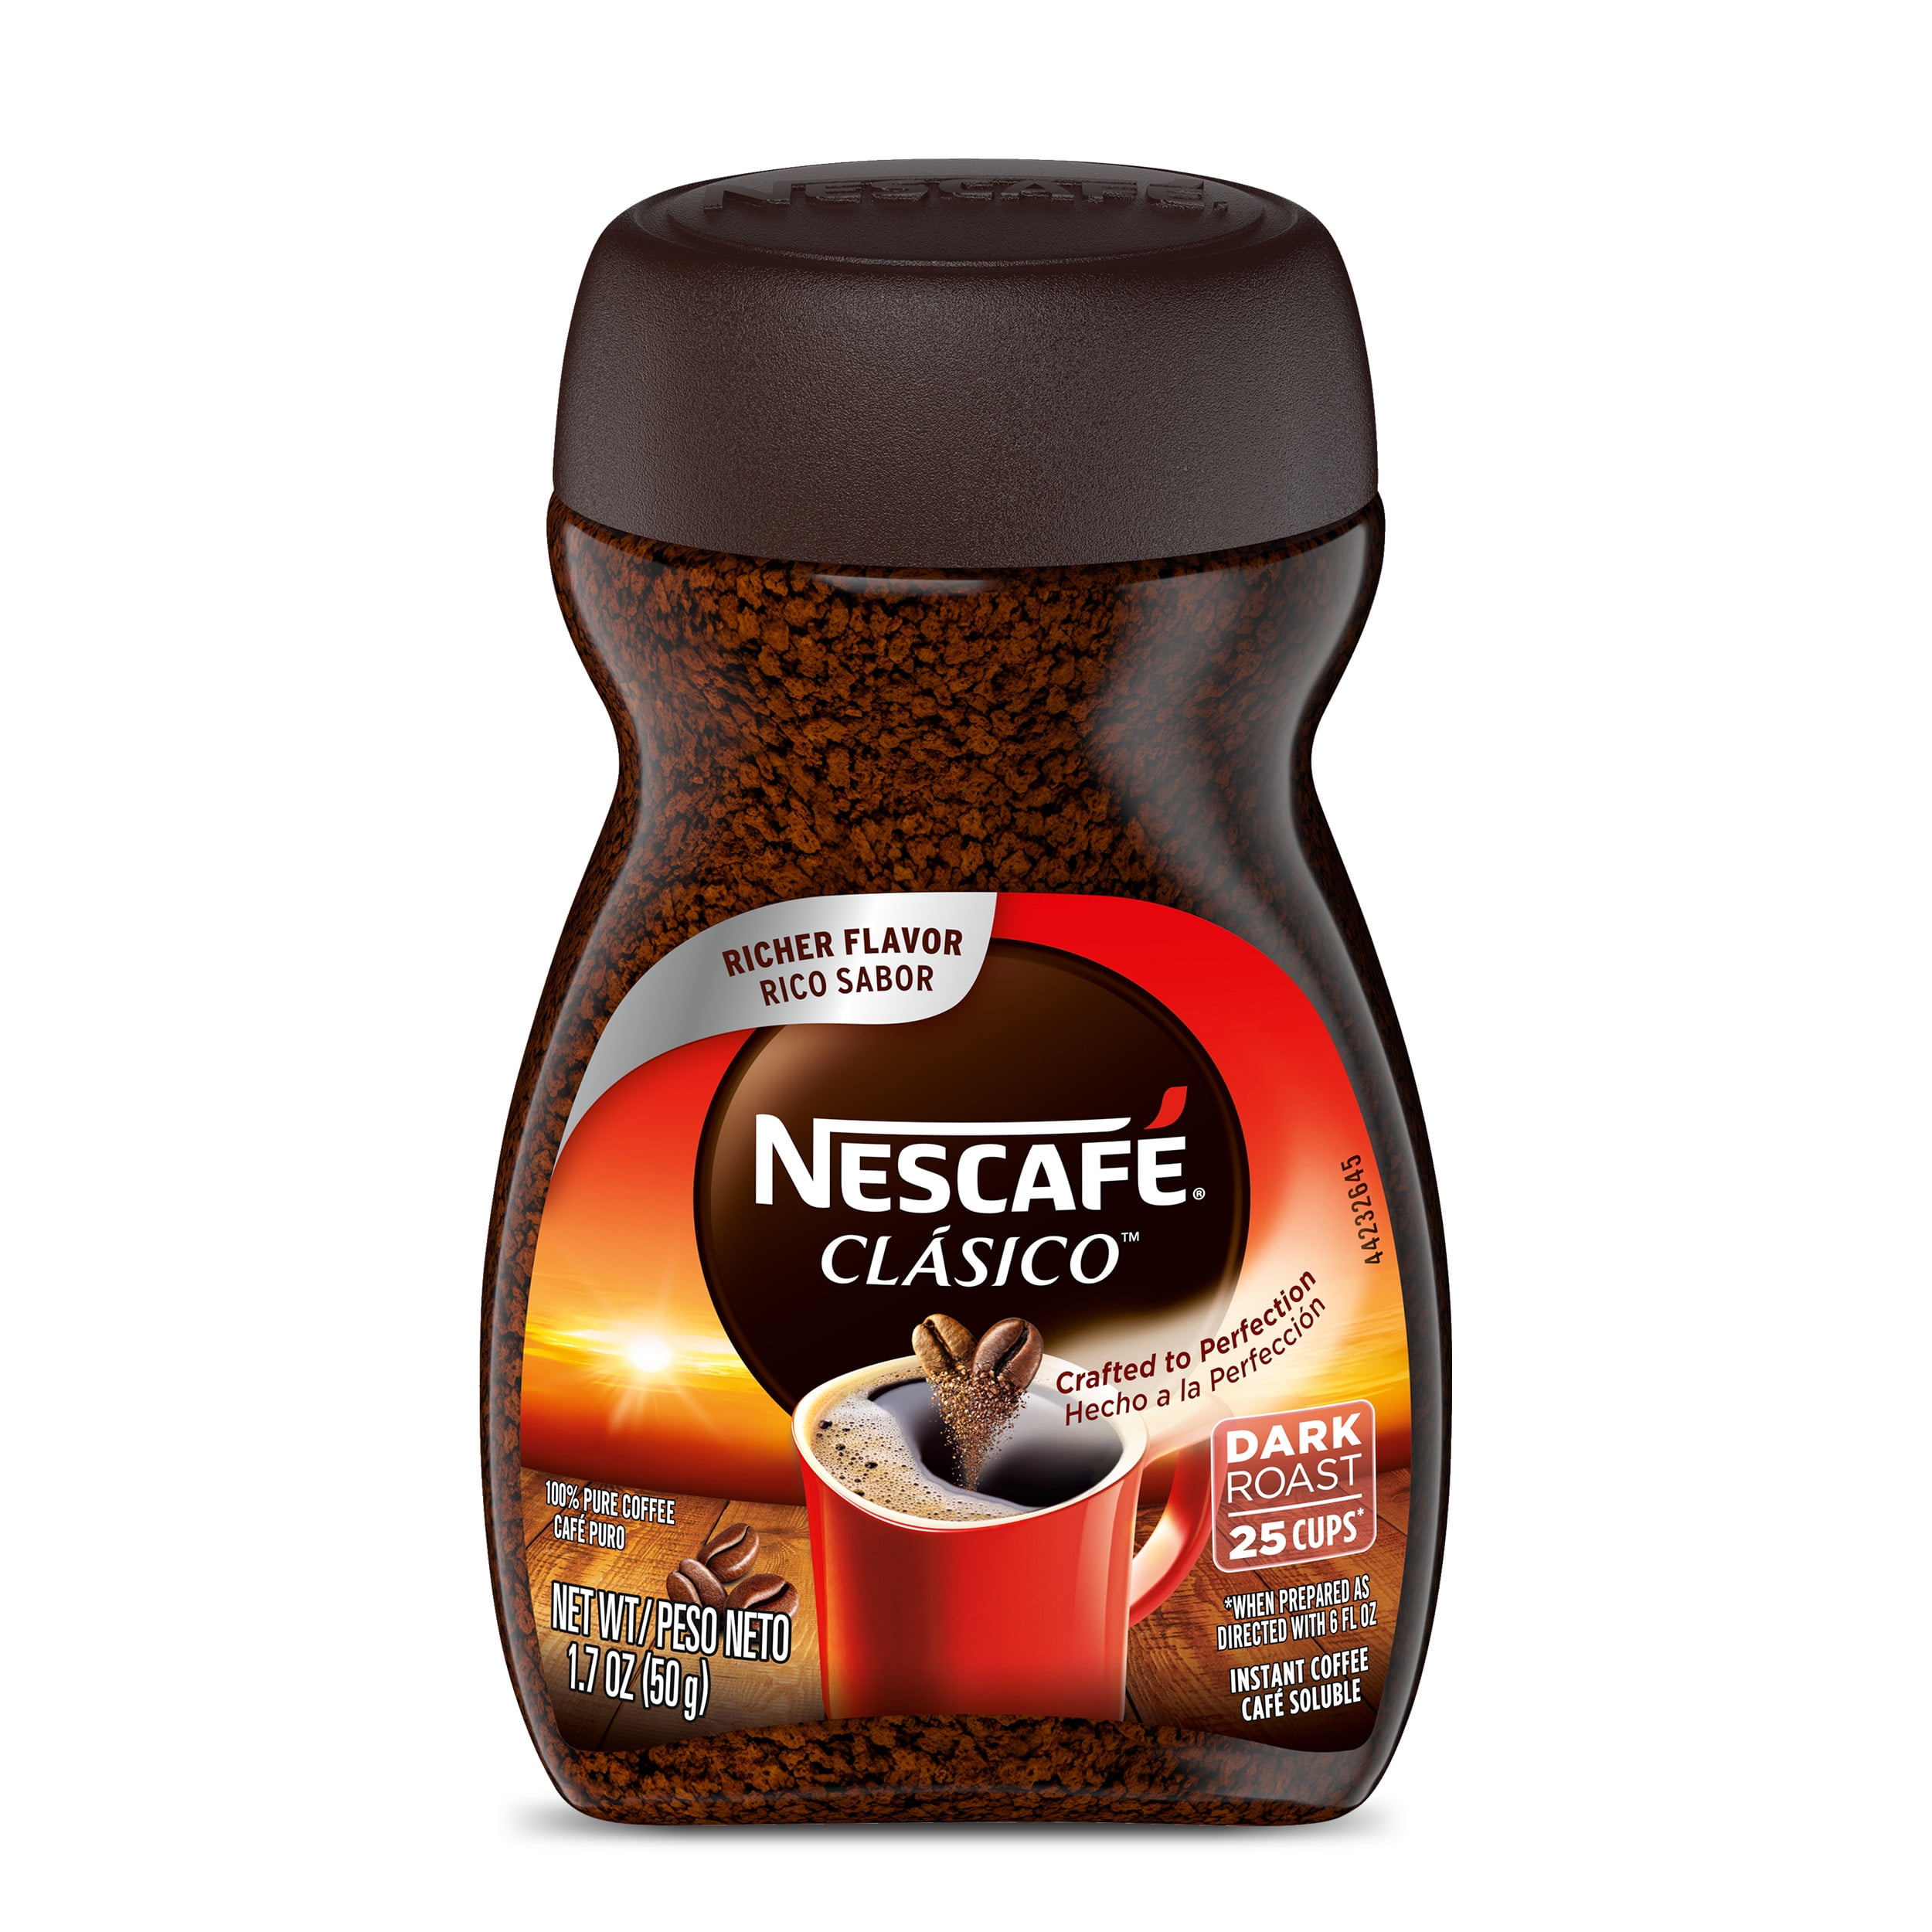 Nescafe Mild Instant Coffee Mix 100-Pack